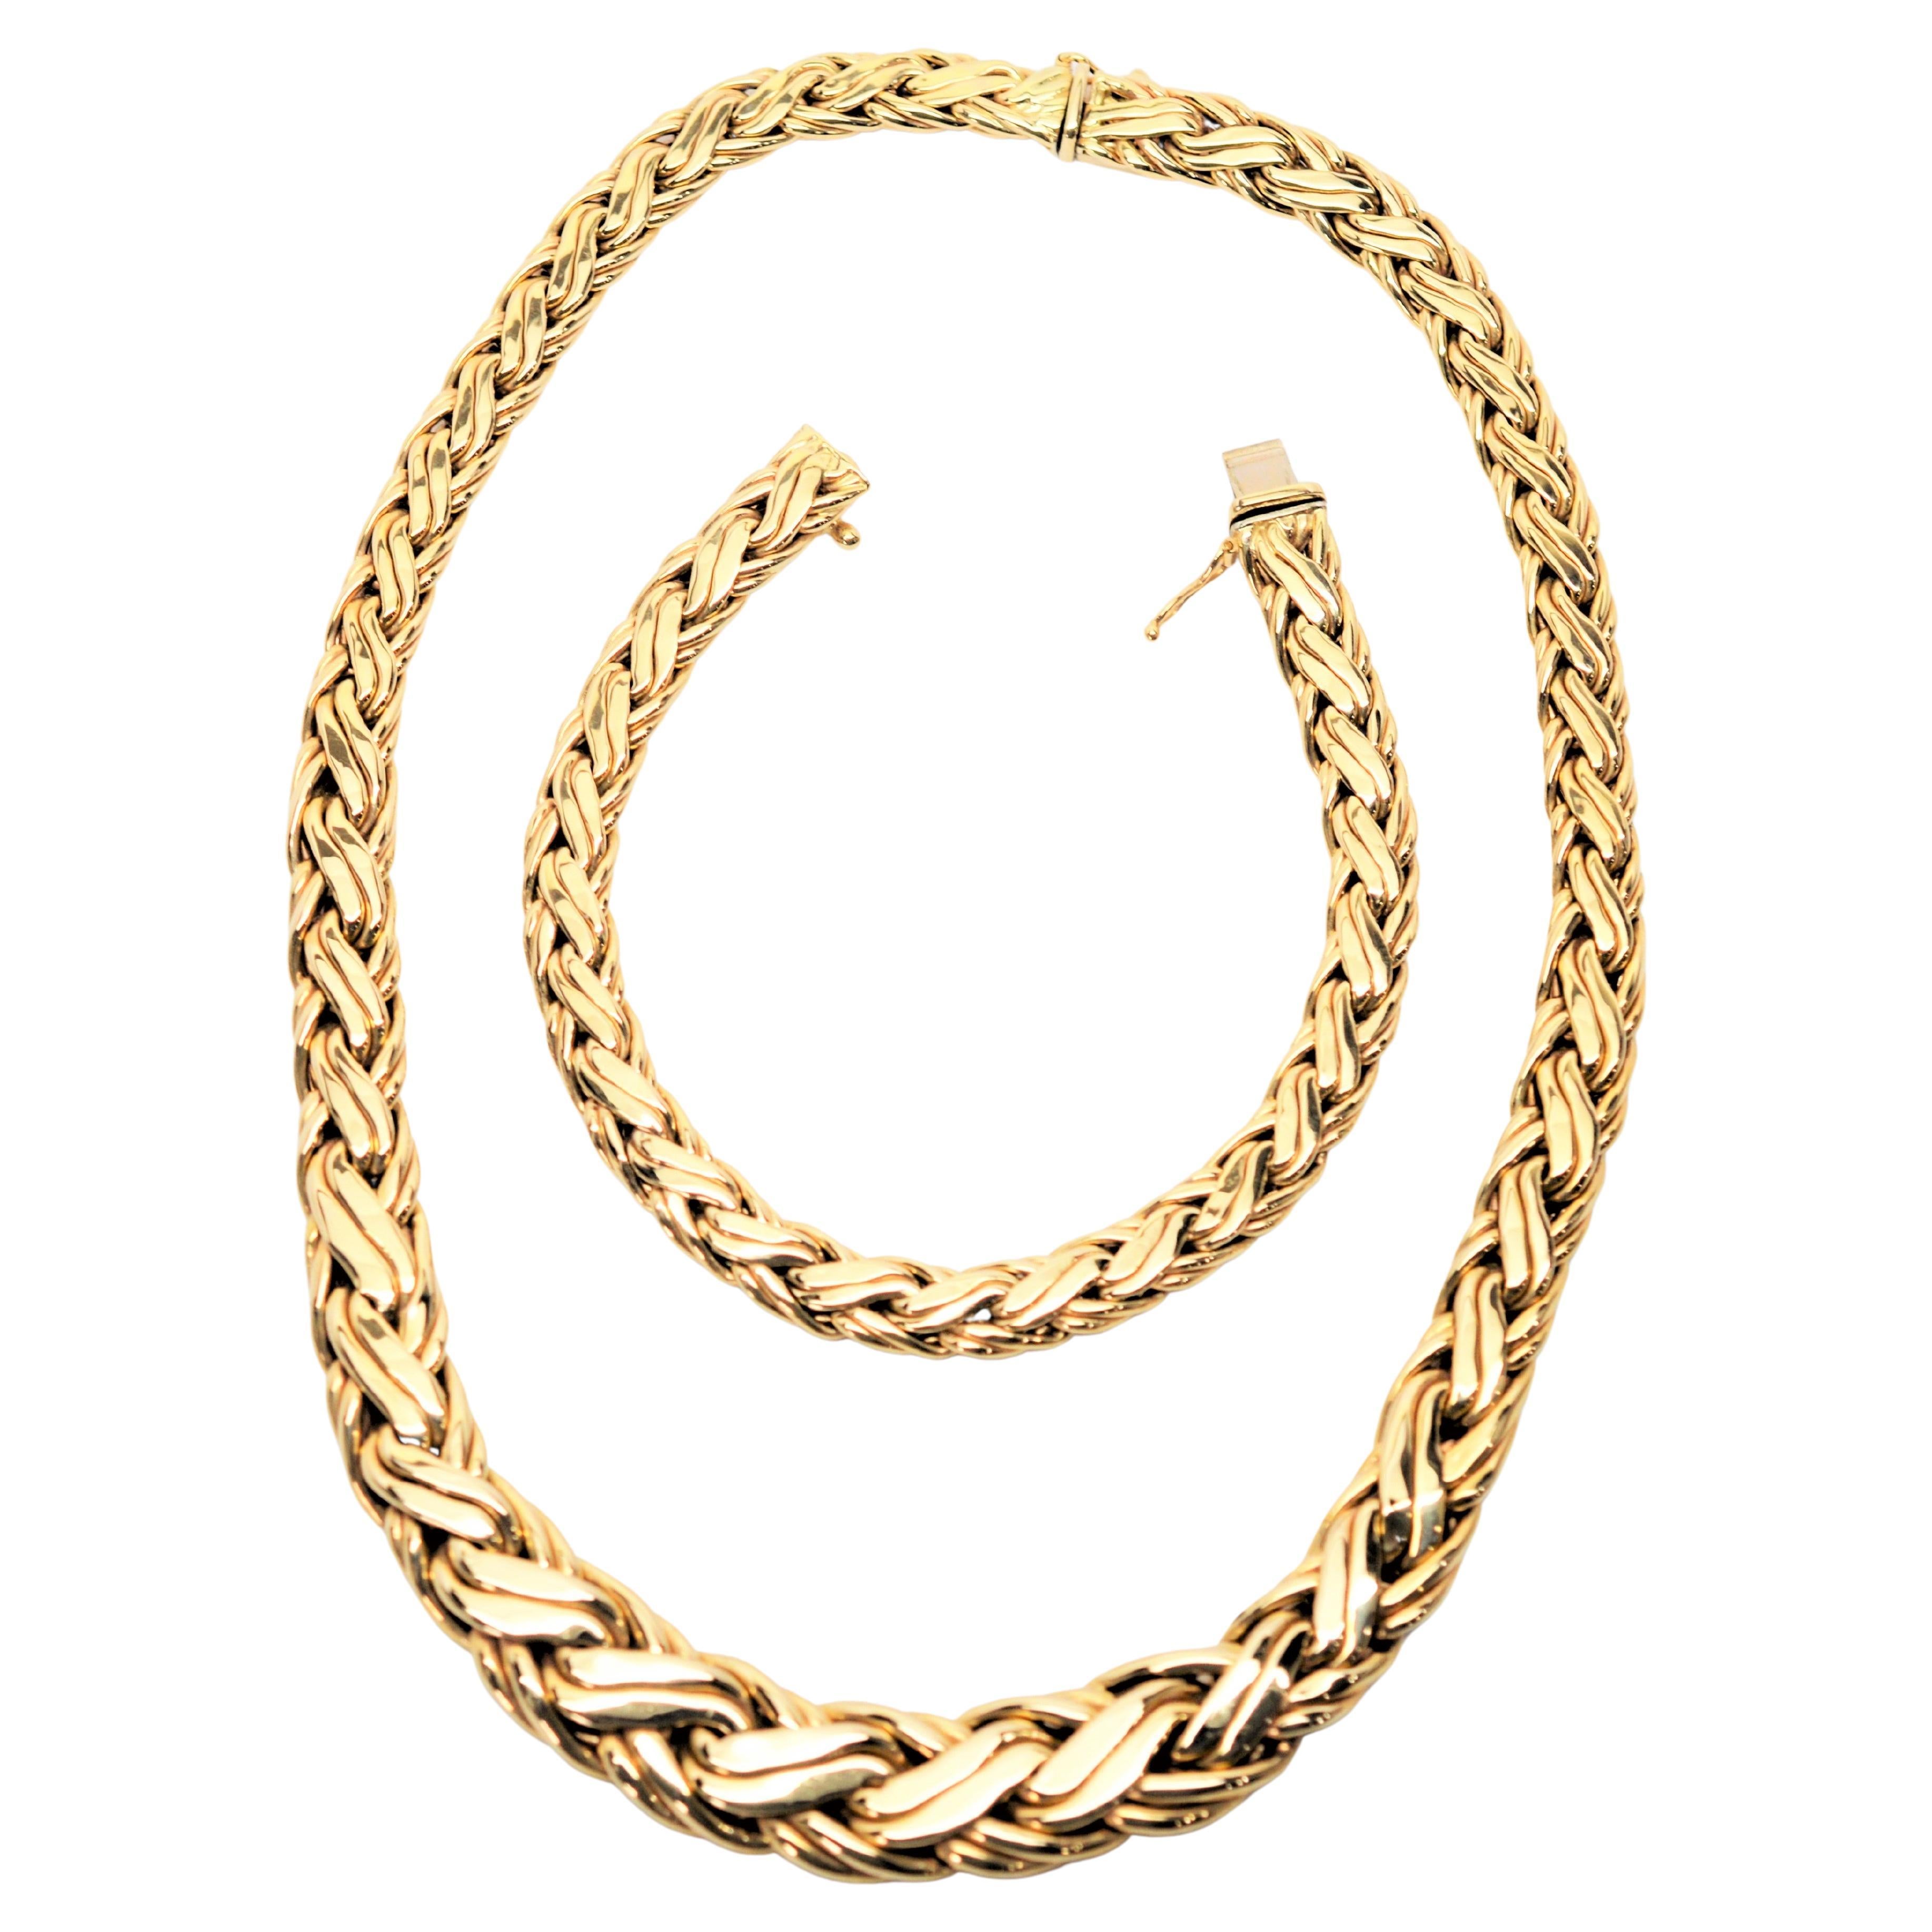 Zelman & Friedman Woven Wheat Braided 14 Karat Yellow Gold Necklace Bracelet Set